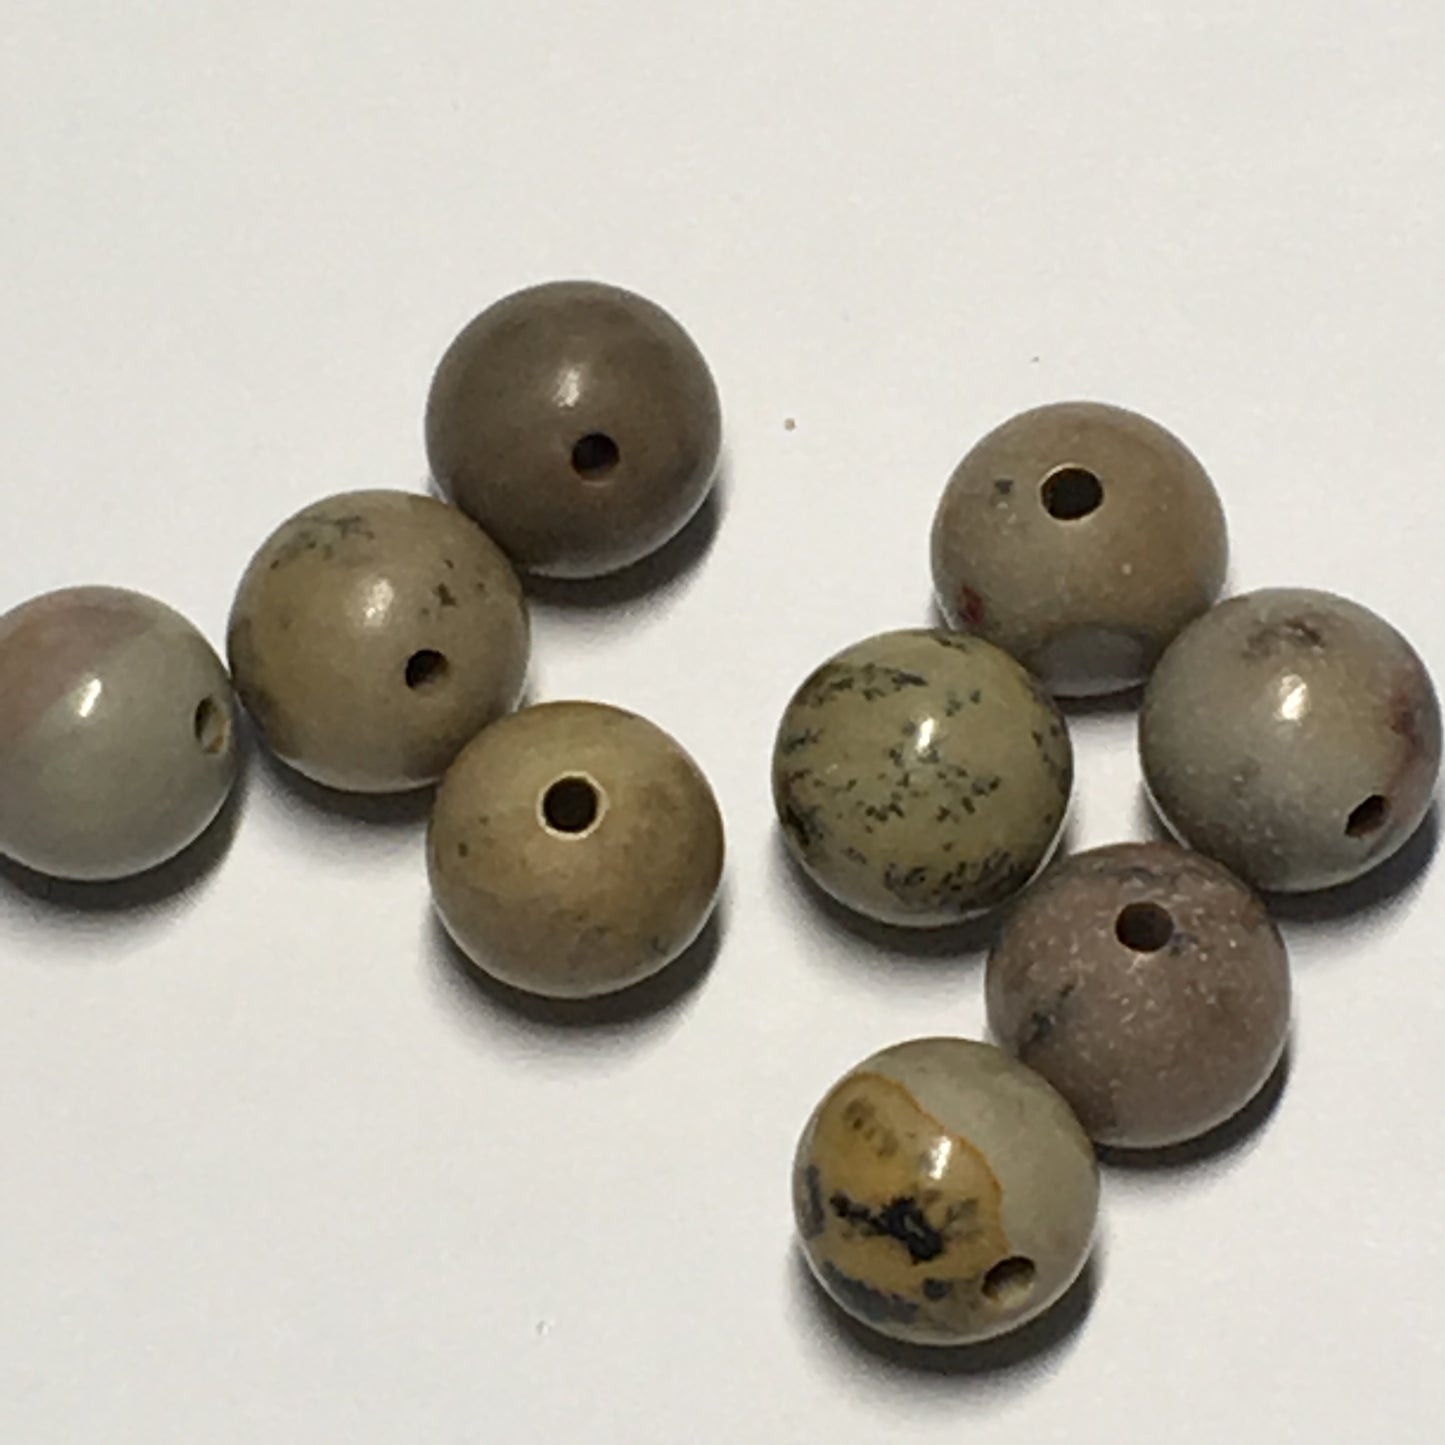 Brown Map Semi-Precious Stone Round Beads, 7 mm - 8 Beads